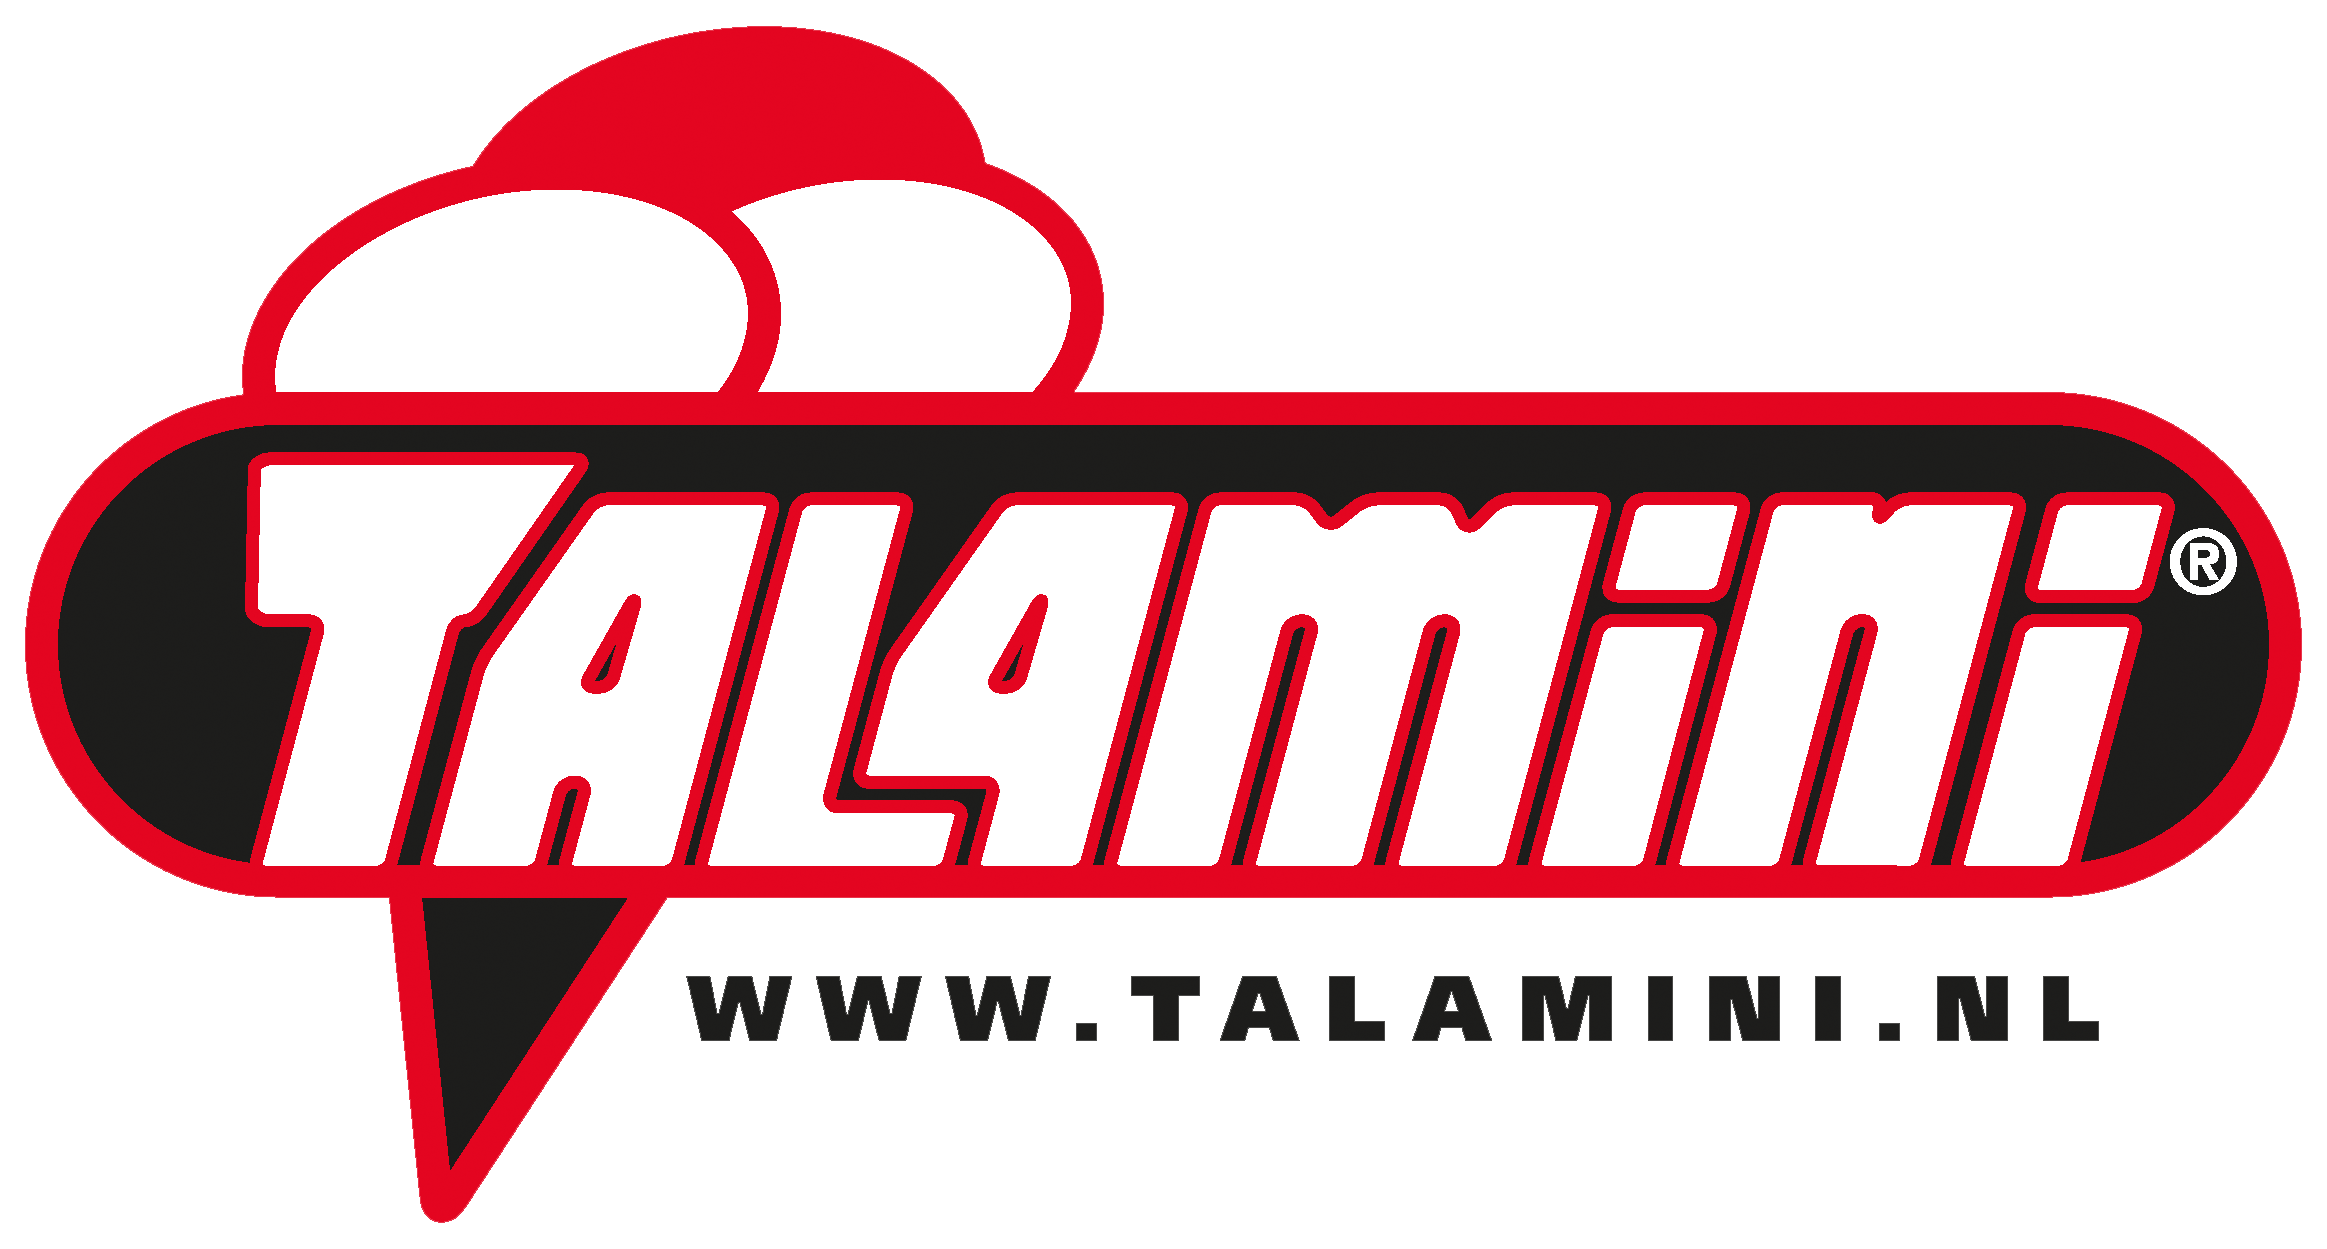 Talamini